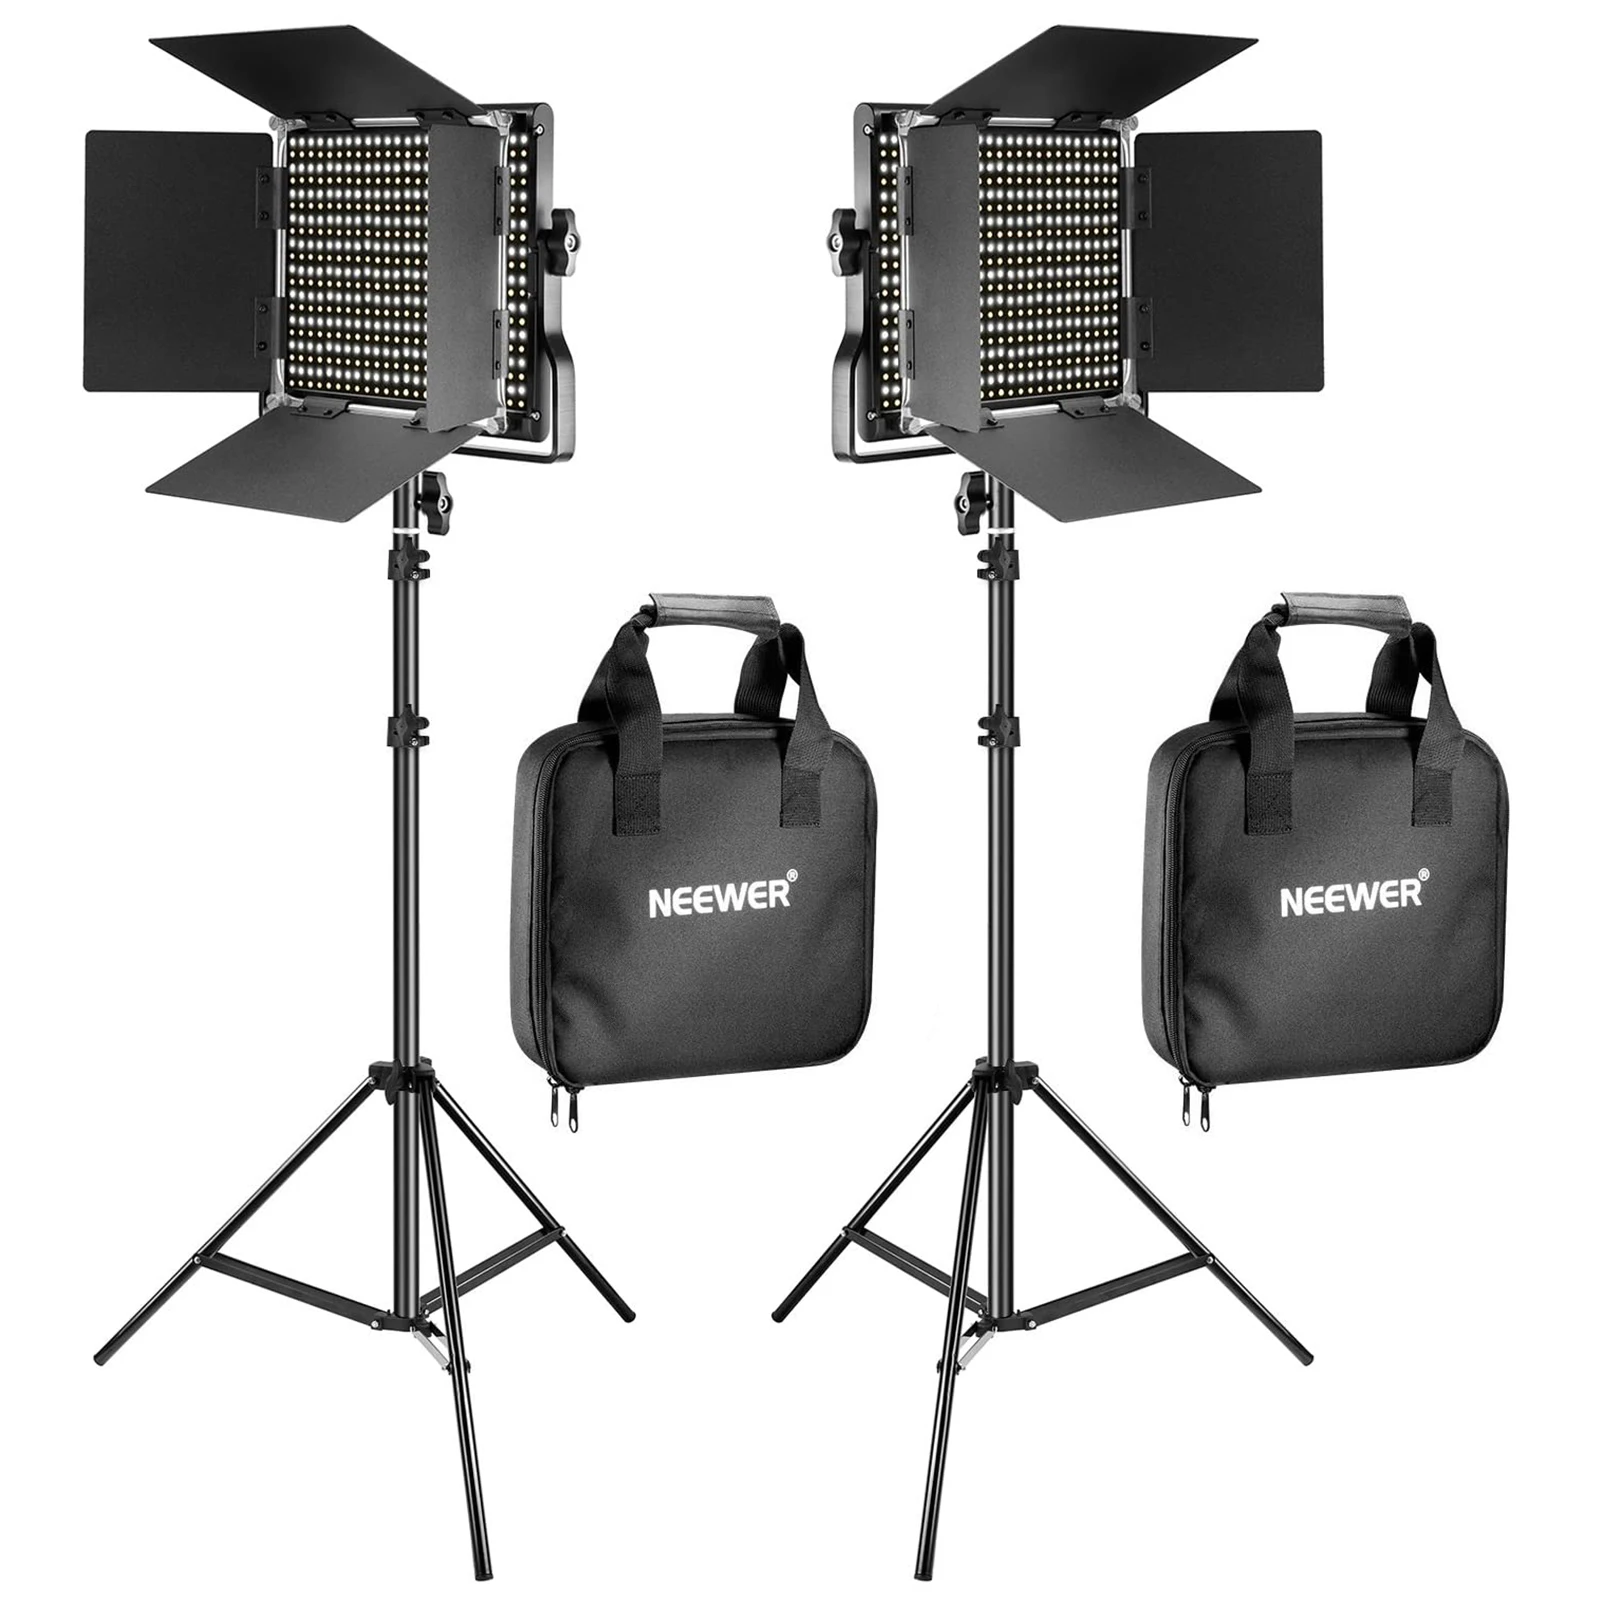 Neewer Neewer 216 Kit Fotografico di Illuminazione a LED per Studio 